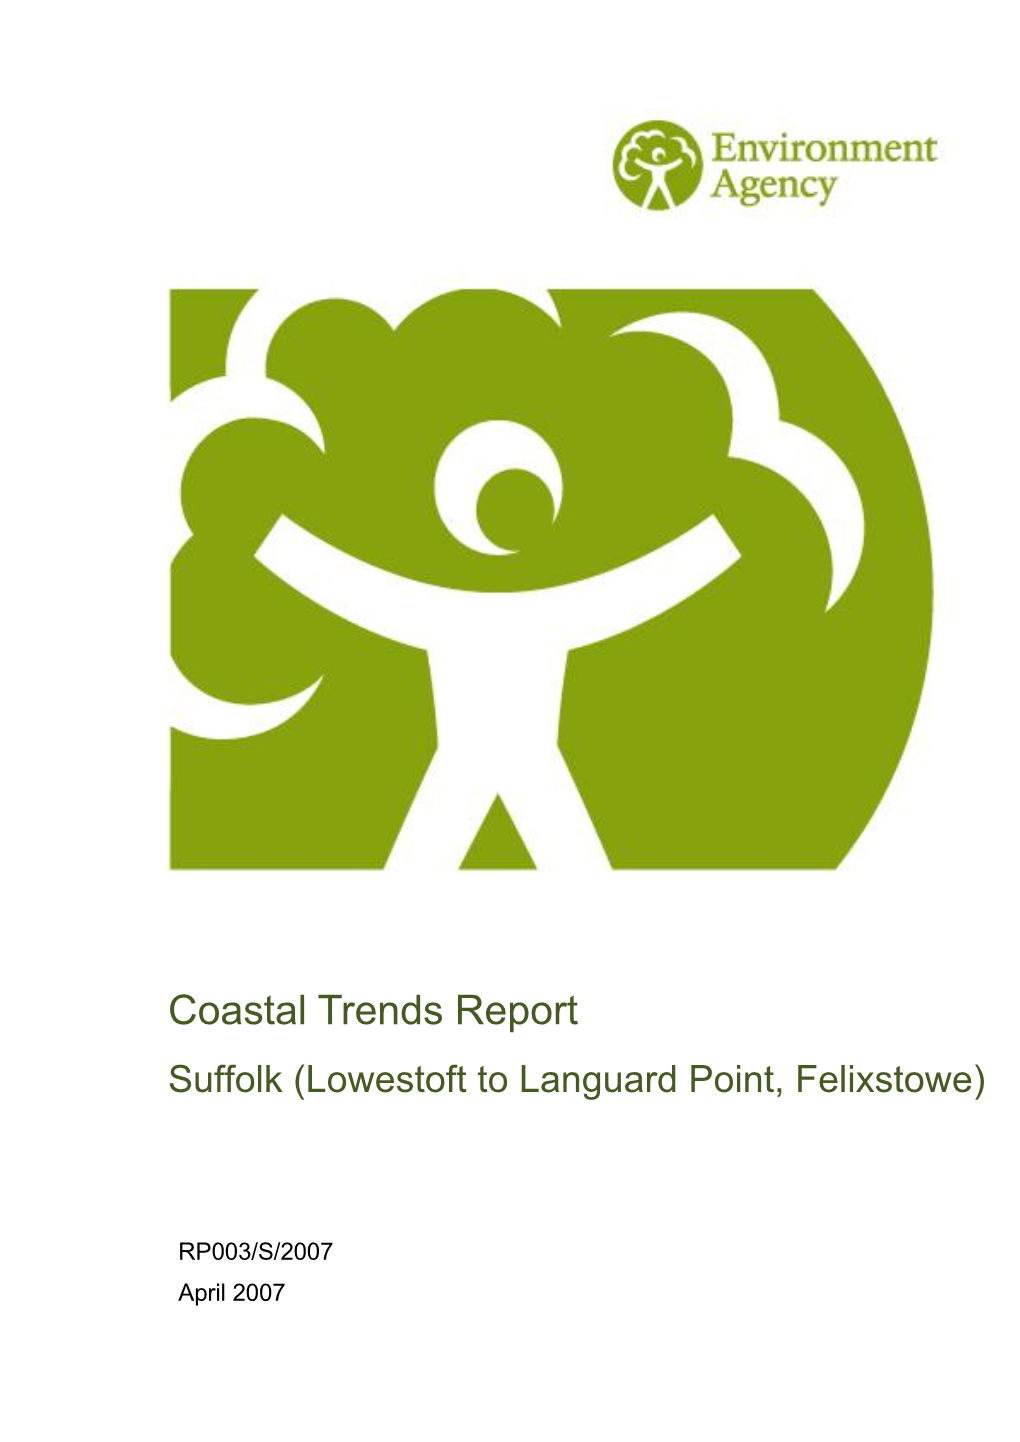 Coastal Trends Report Suffolk (Lowestoft to Languard Point, Felixstowe)